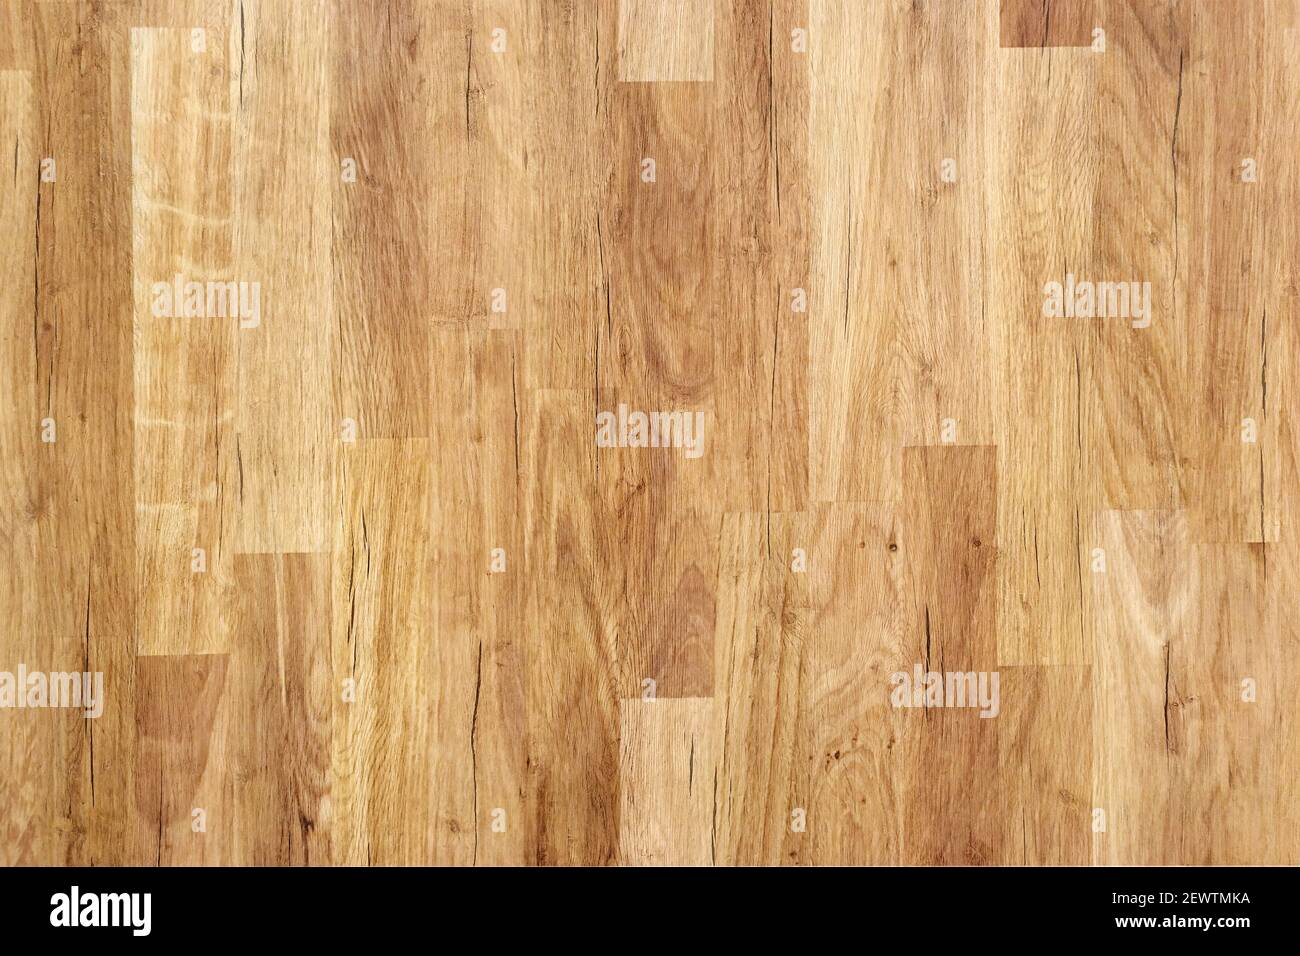 wood parquet floor. Wooden laminate texture background Stock Photo